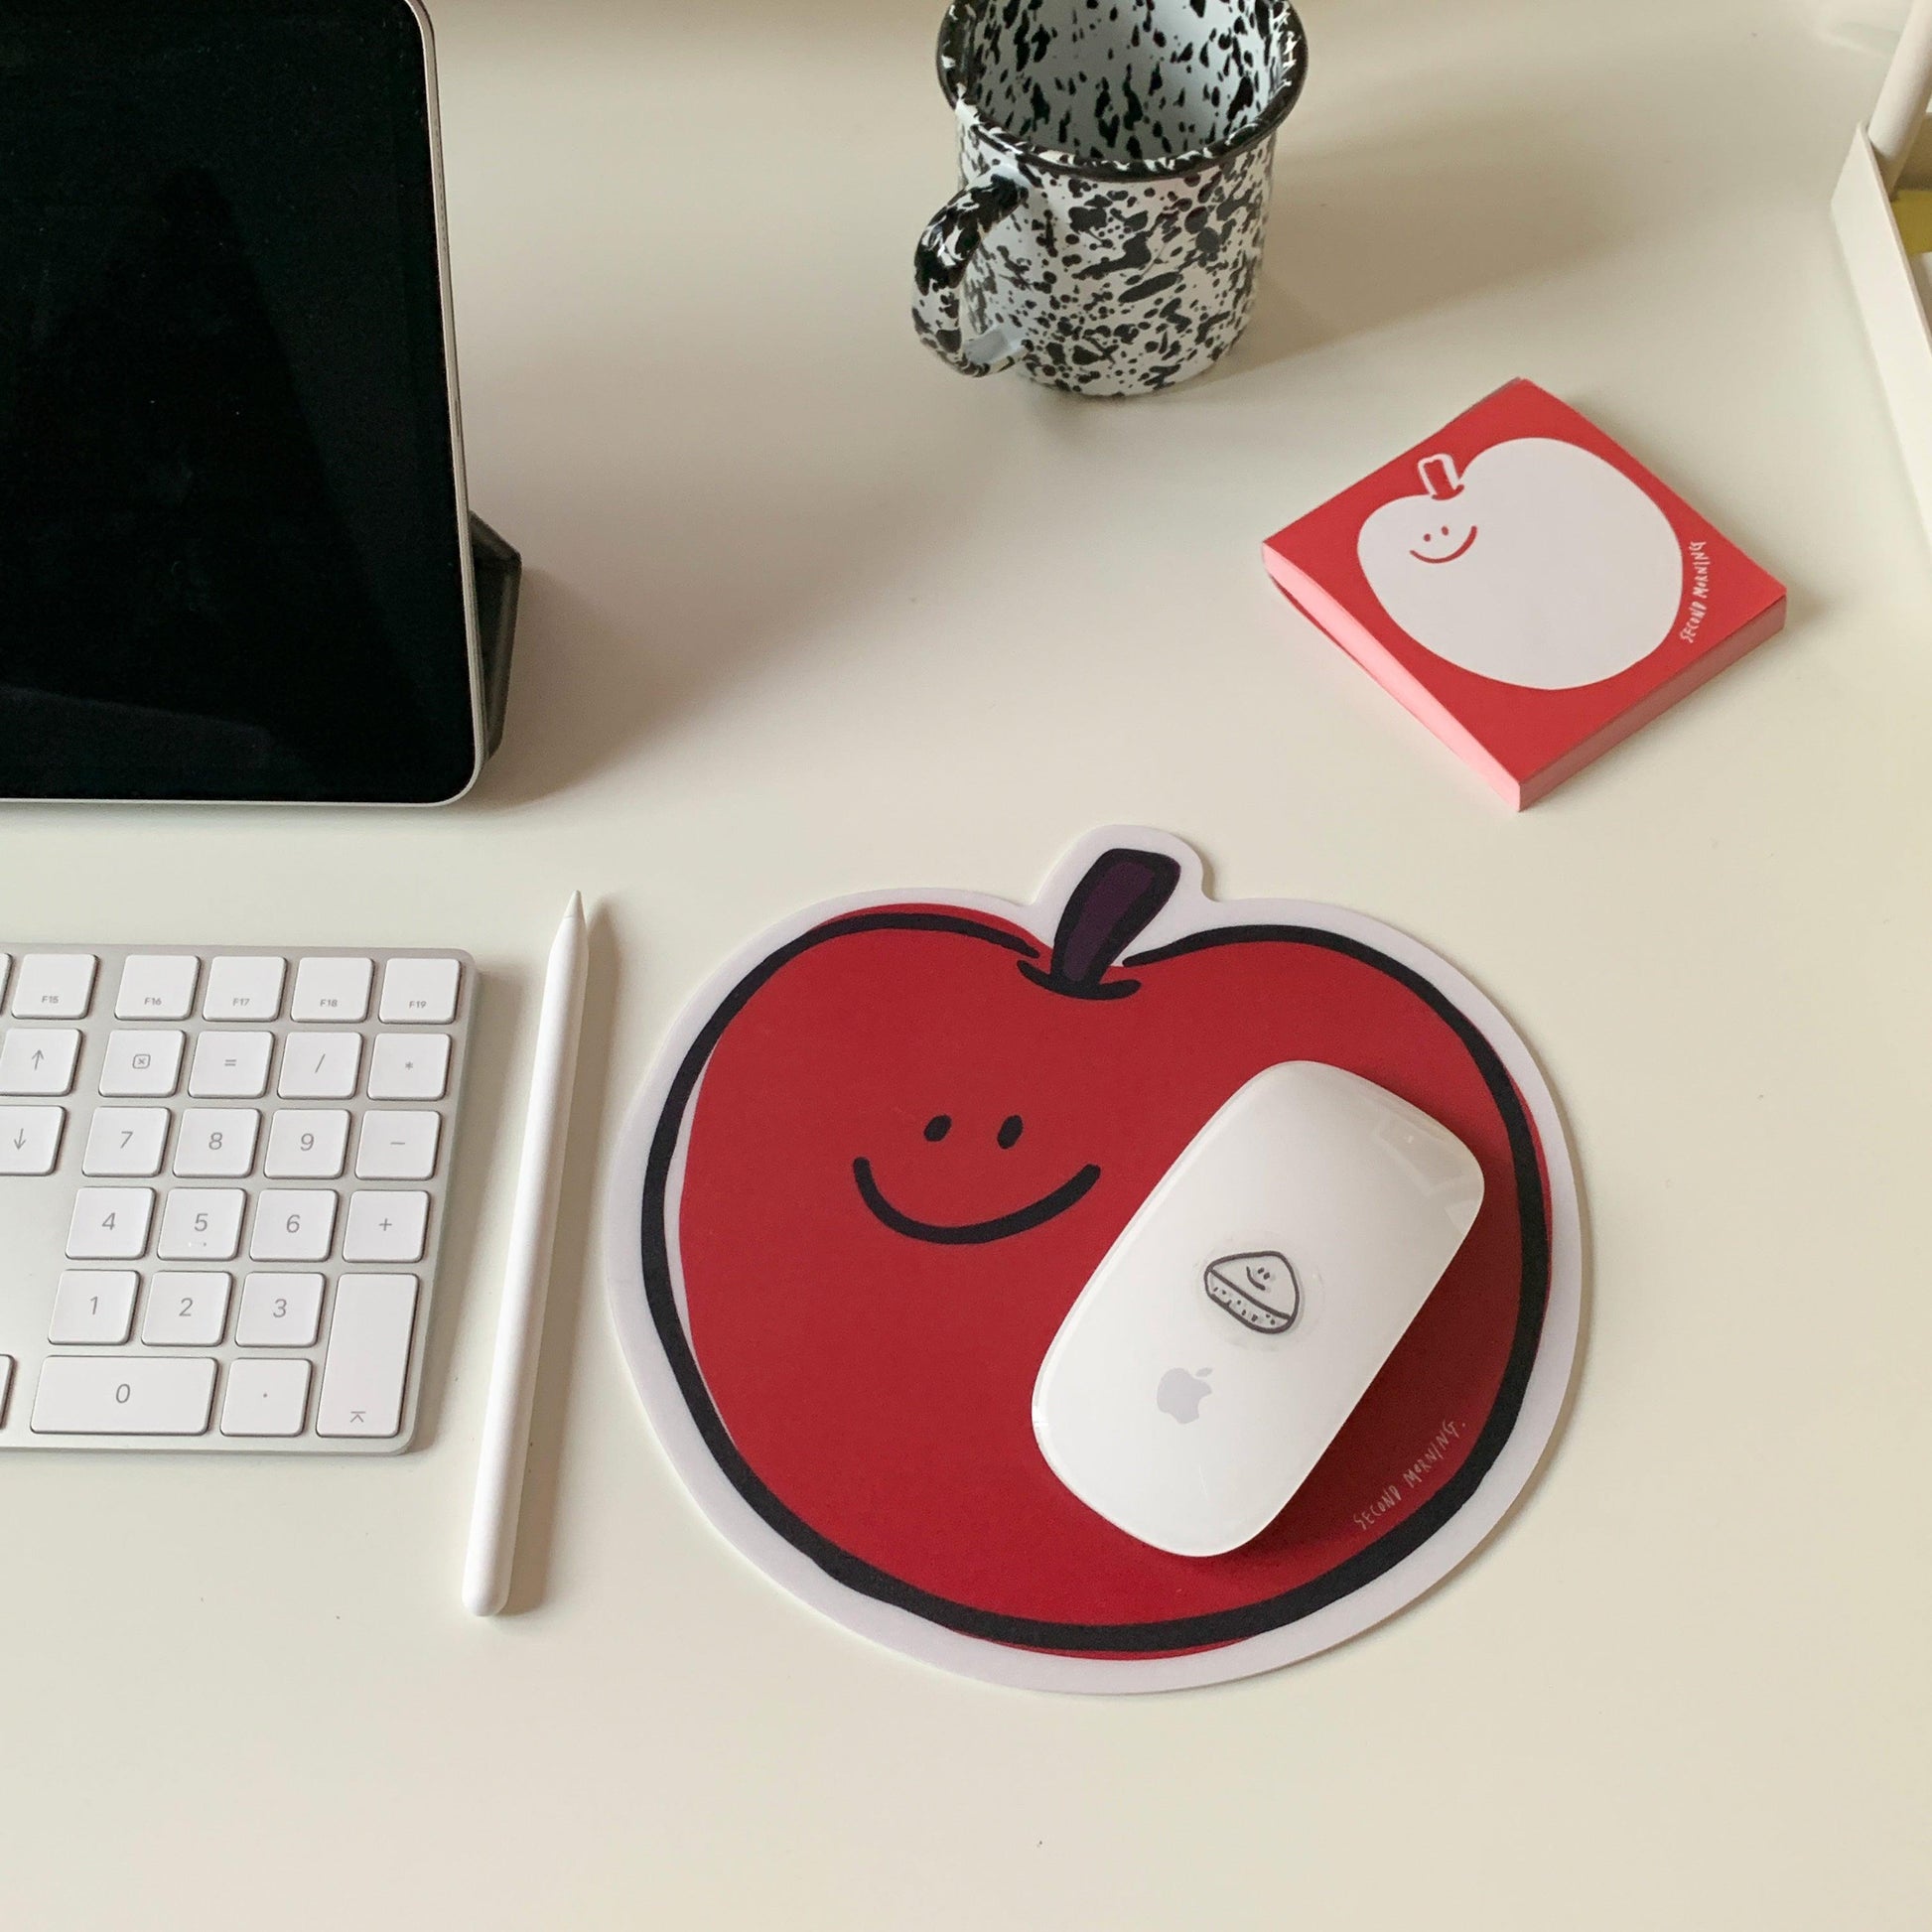 Second Morning Apple Mouse Pad 蘋果滑鼠墊 - SOUL SIMPLE HK